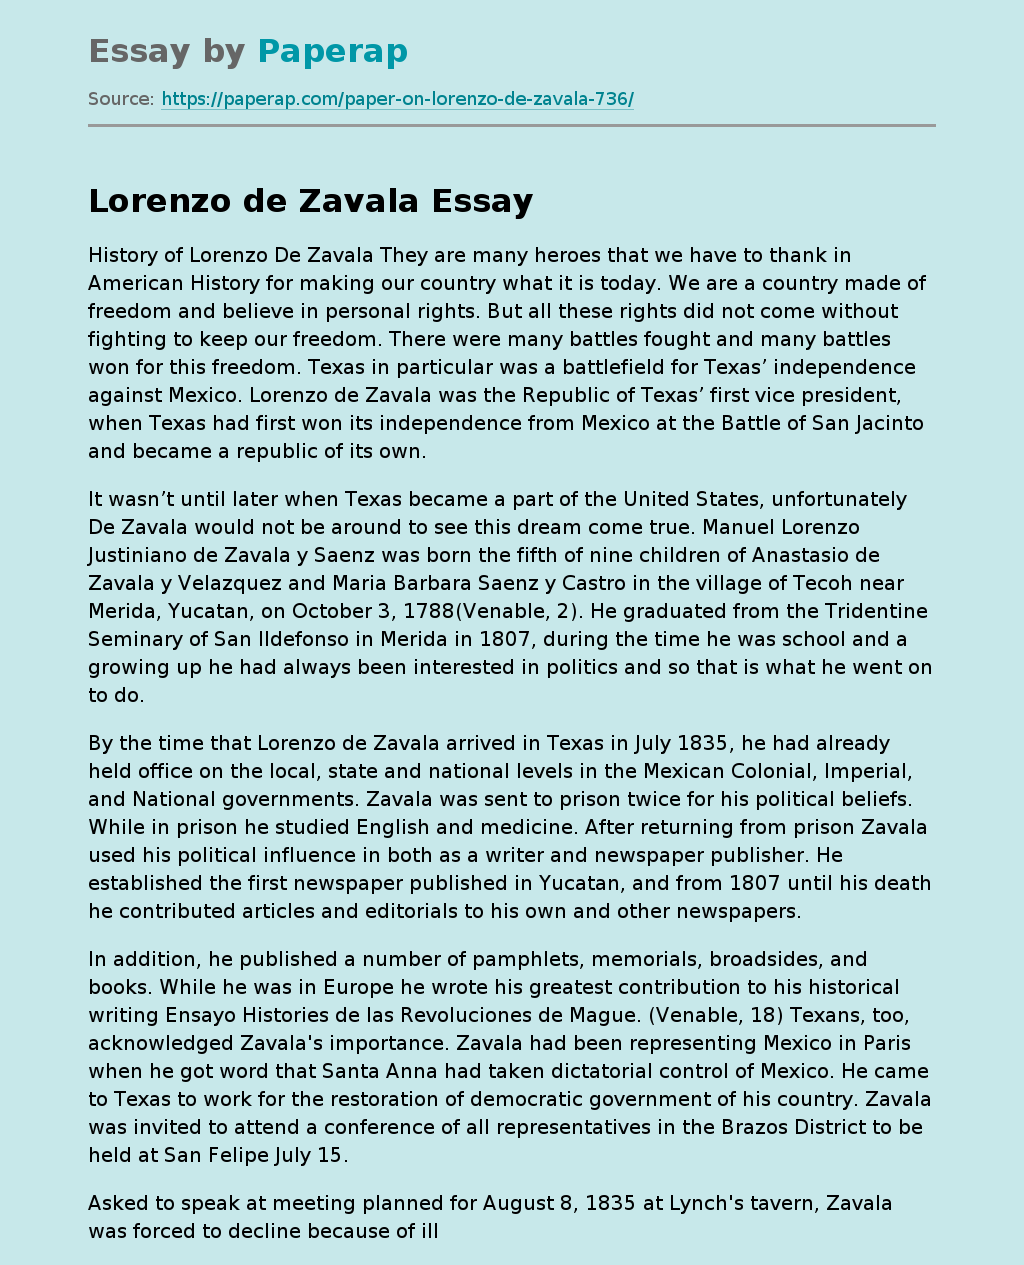 History of Lorenzo De Zavala